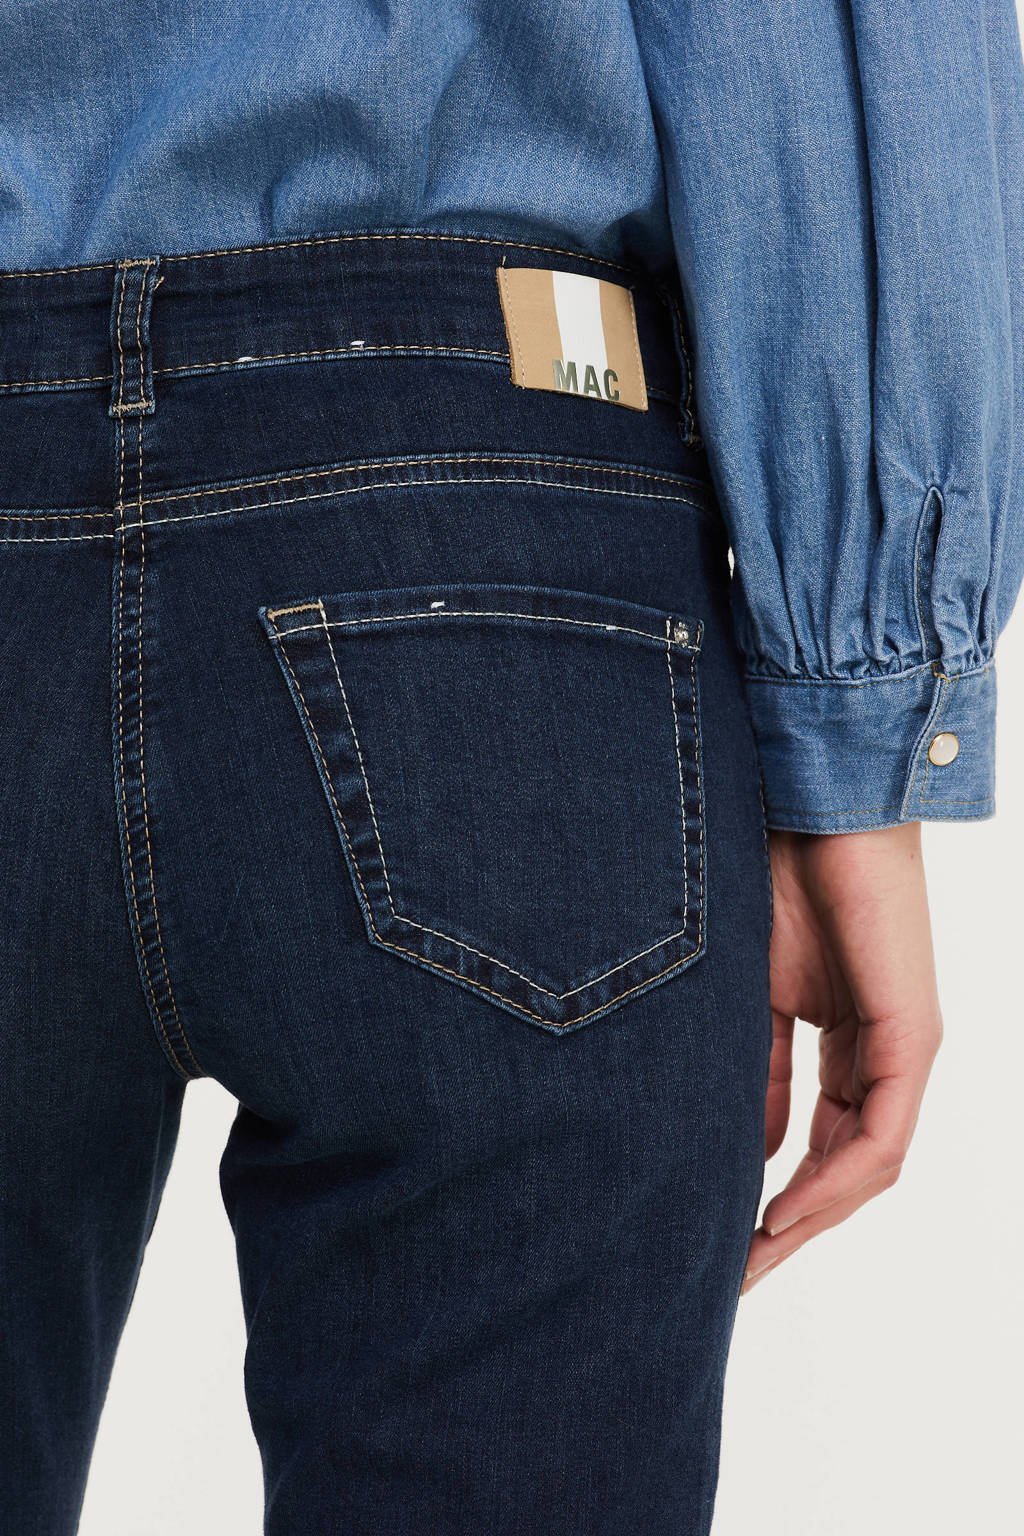 wehkamp jeans MAC wash basic slim slim | fit new